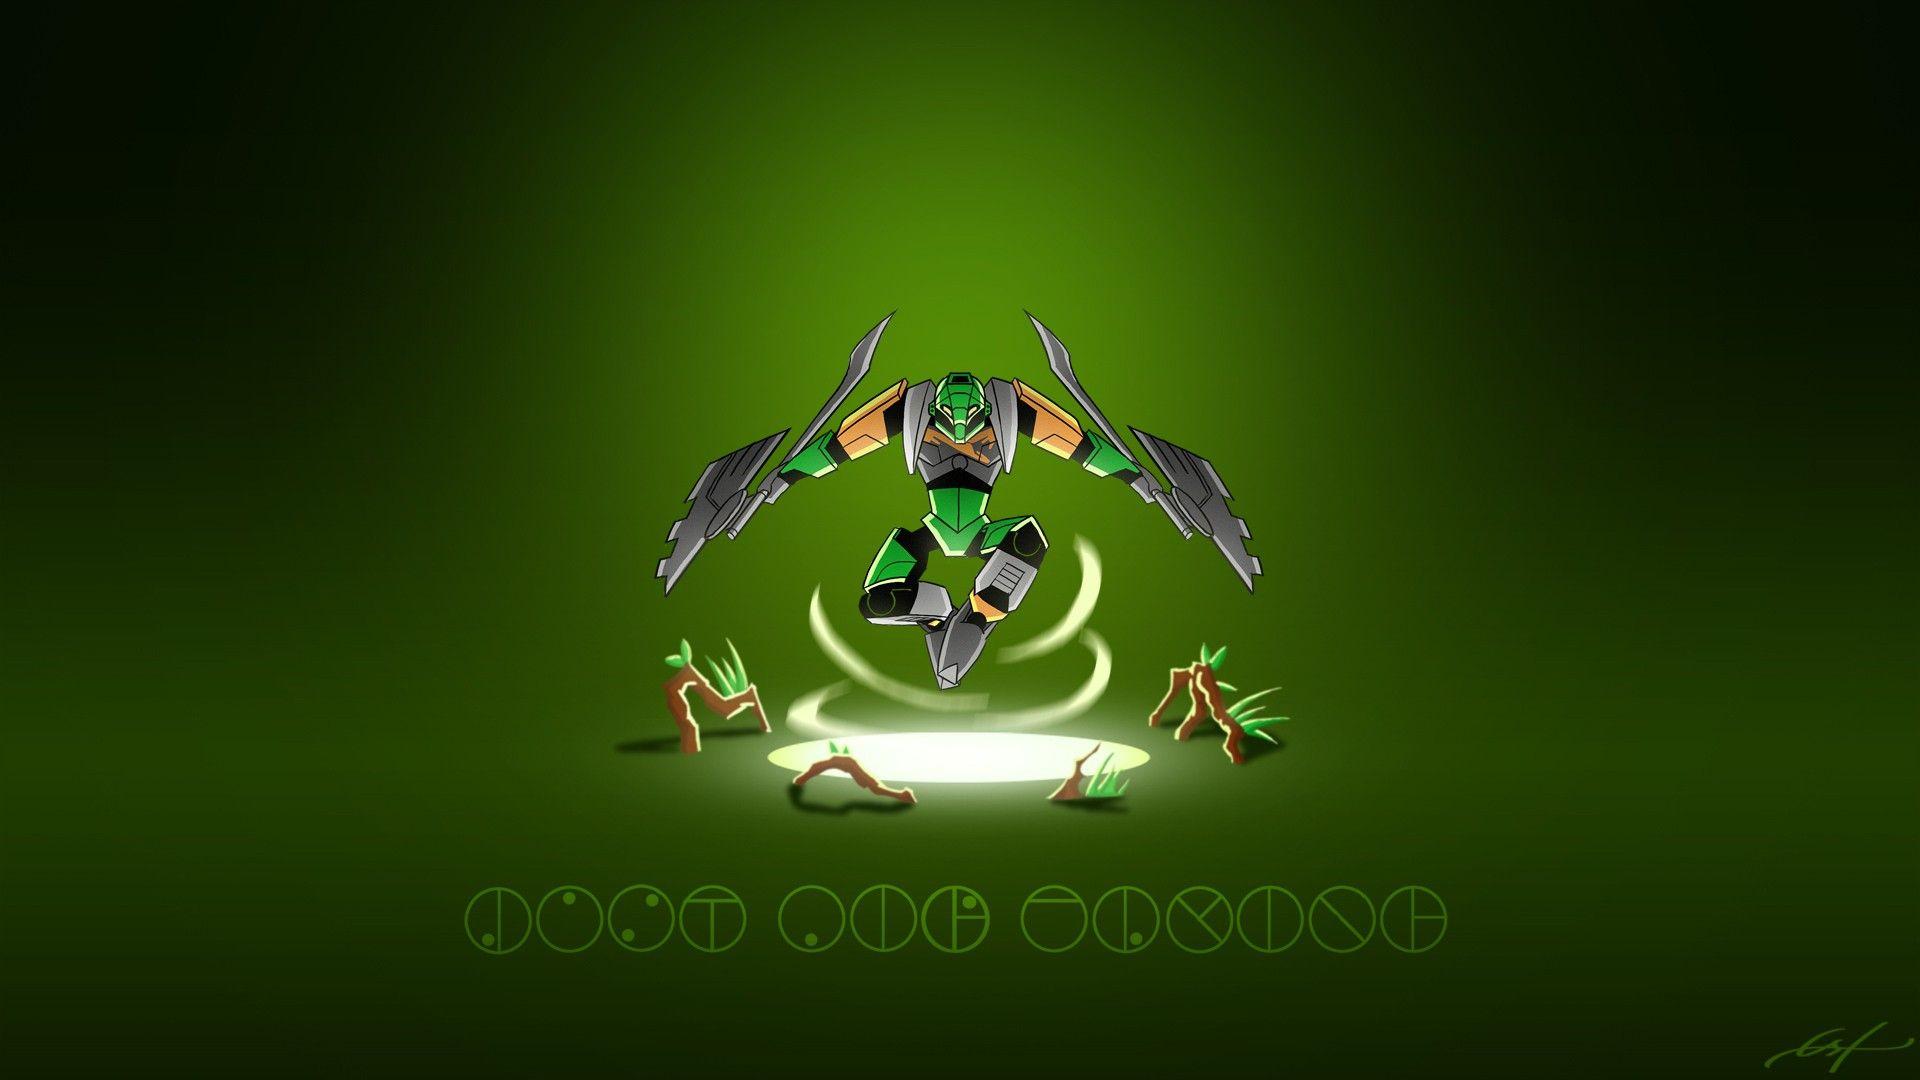 Bionicle Logo - Wallpaper : illustration, logo, green, Bionicle, Toa, screenshot ...